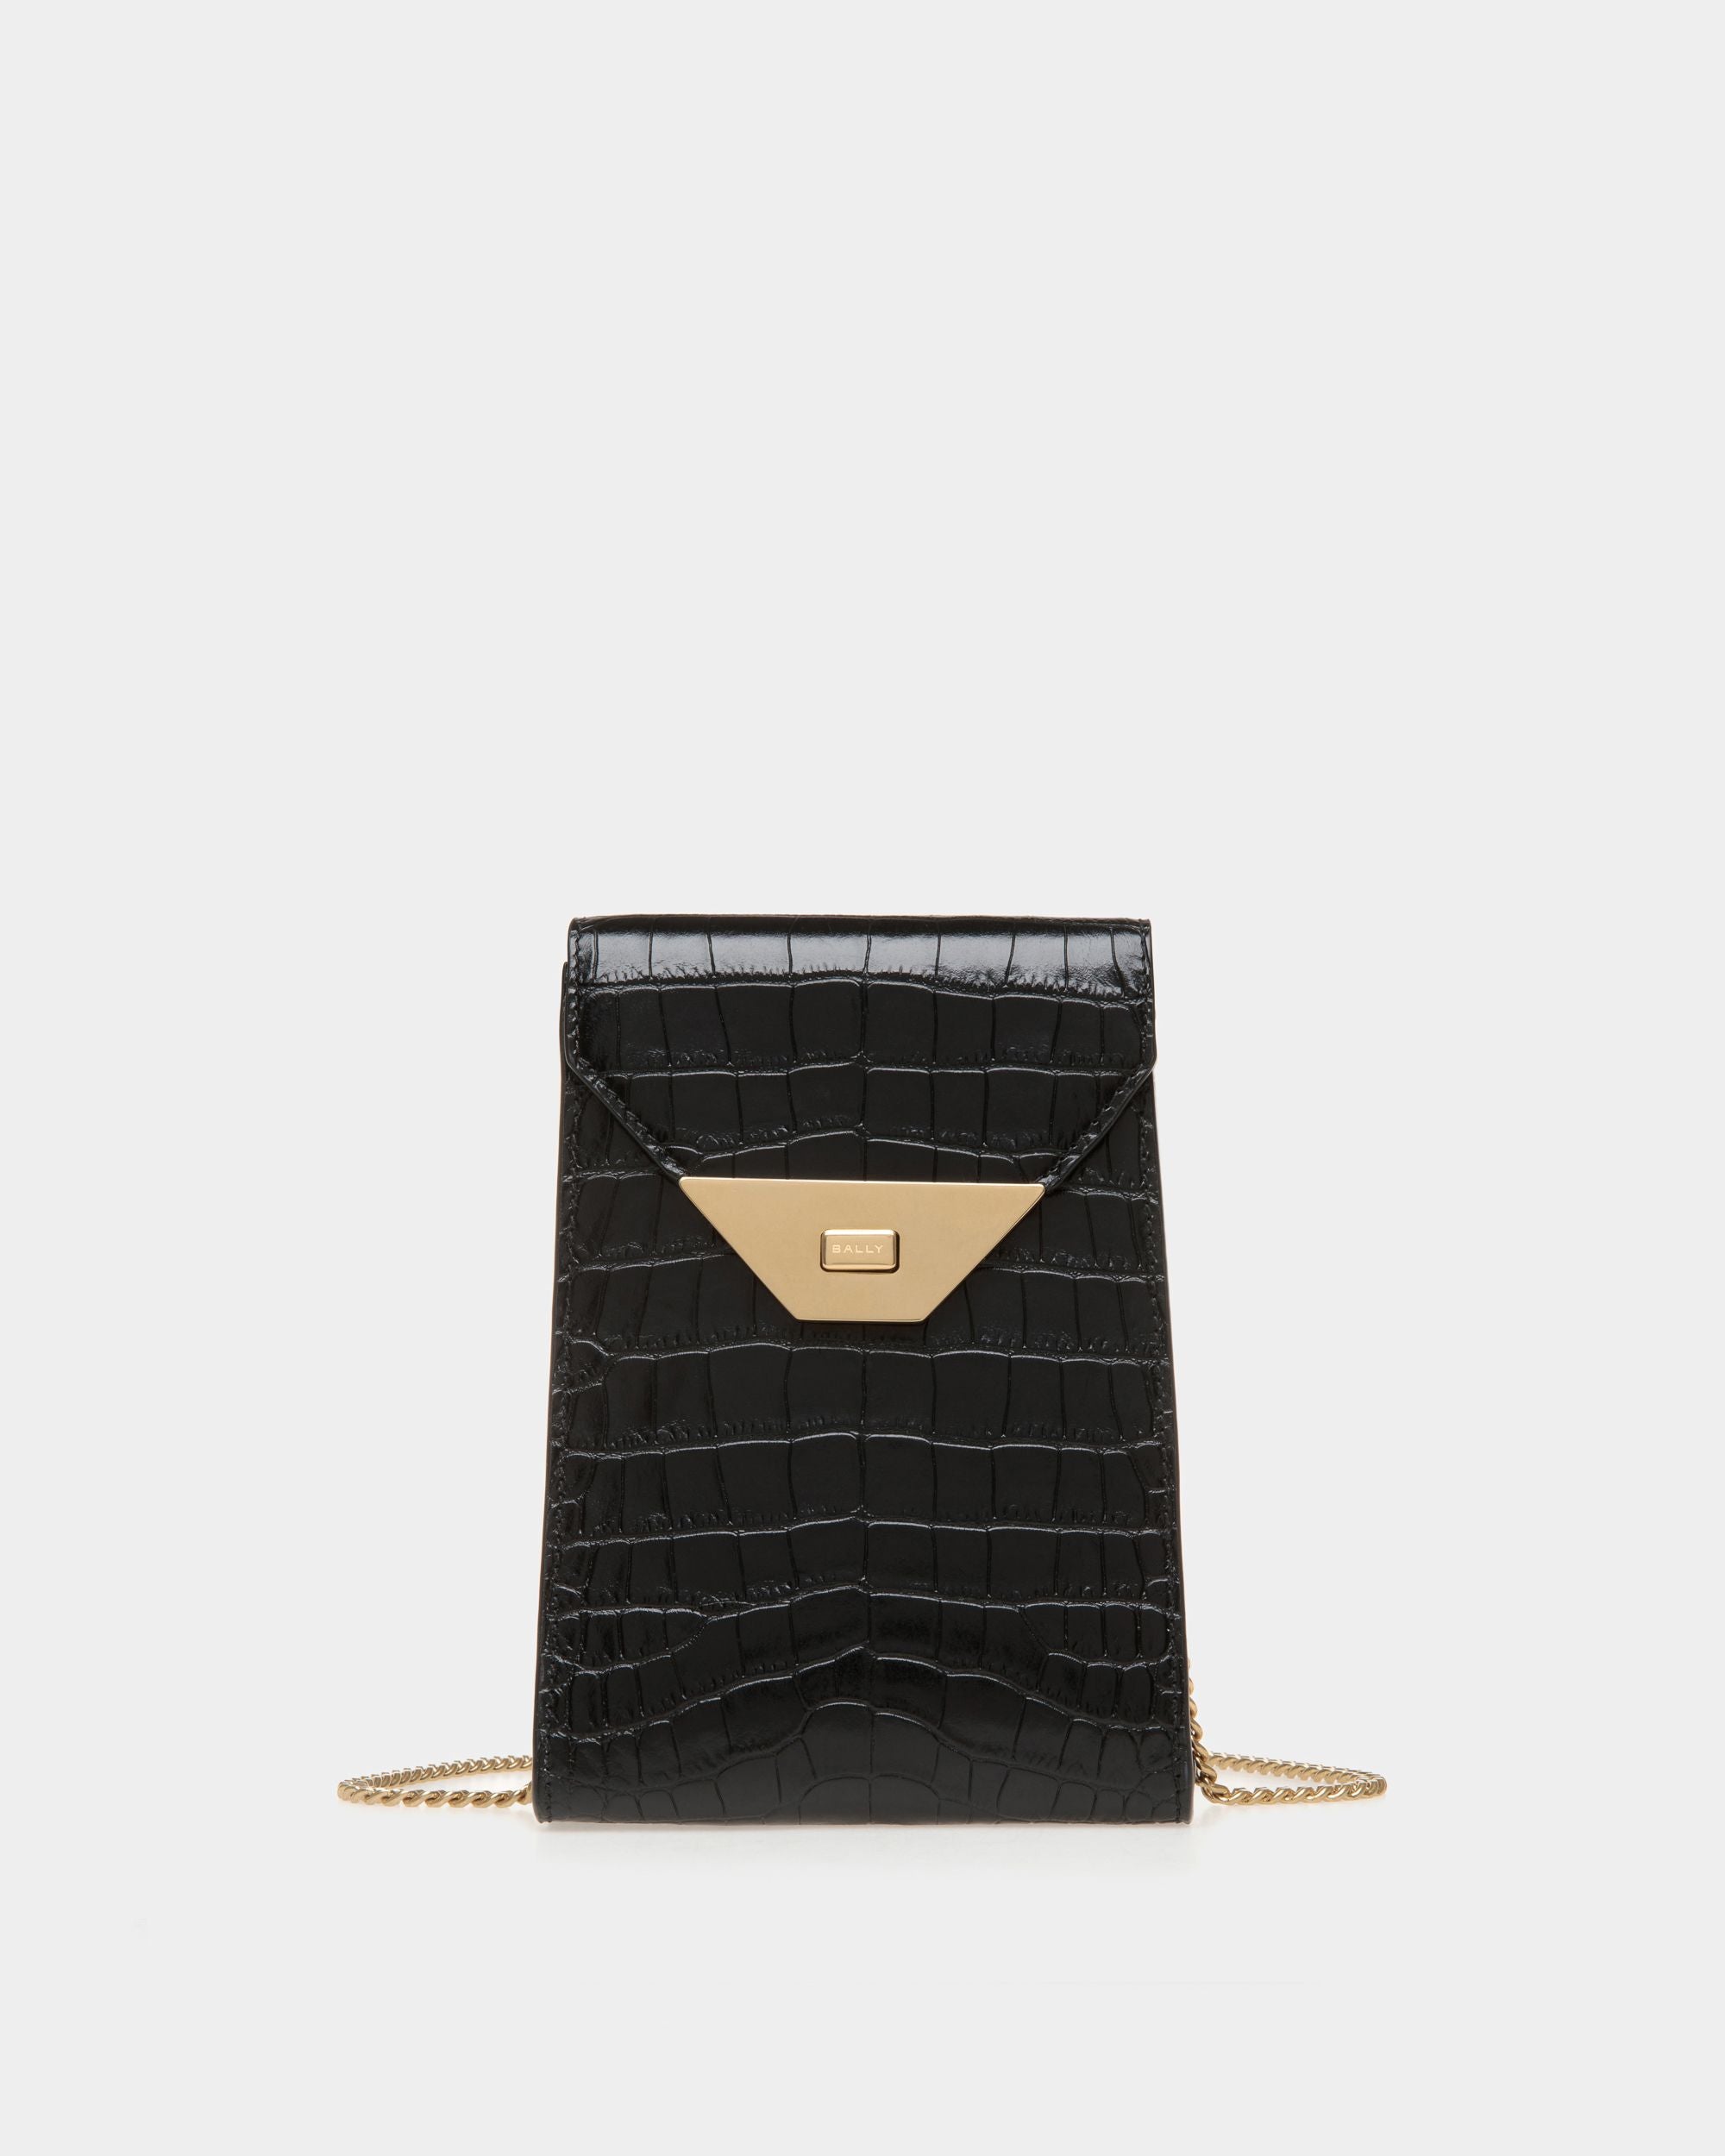 Tilt | Women's Phone Bag in Black Crocodile Print Leather | Bally | Still Life Front